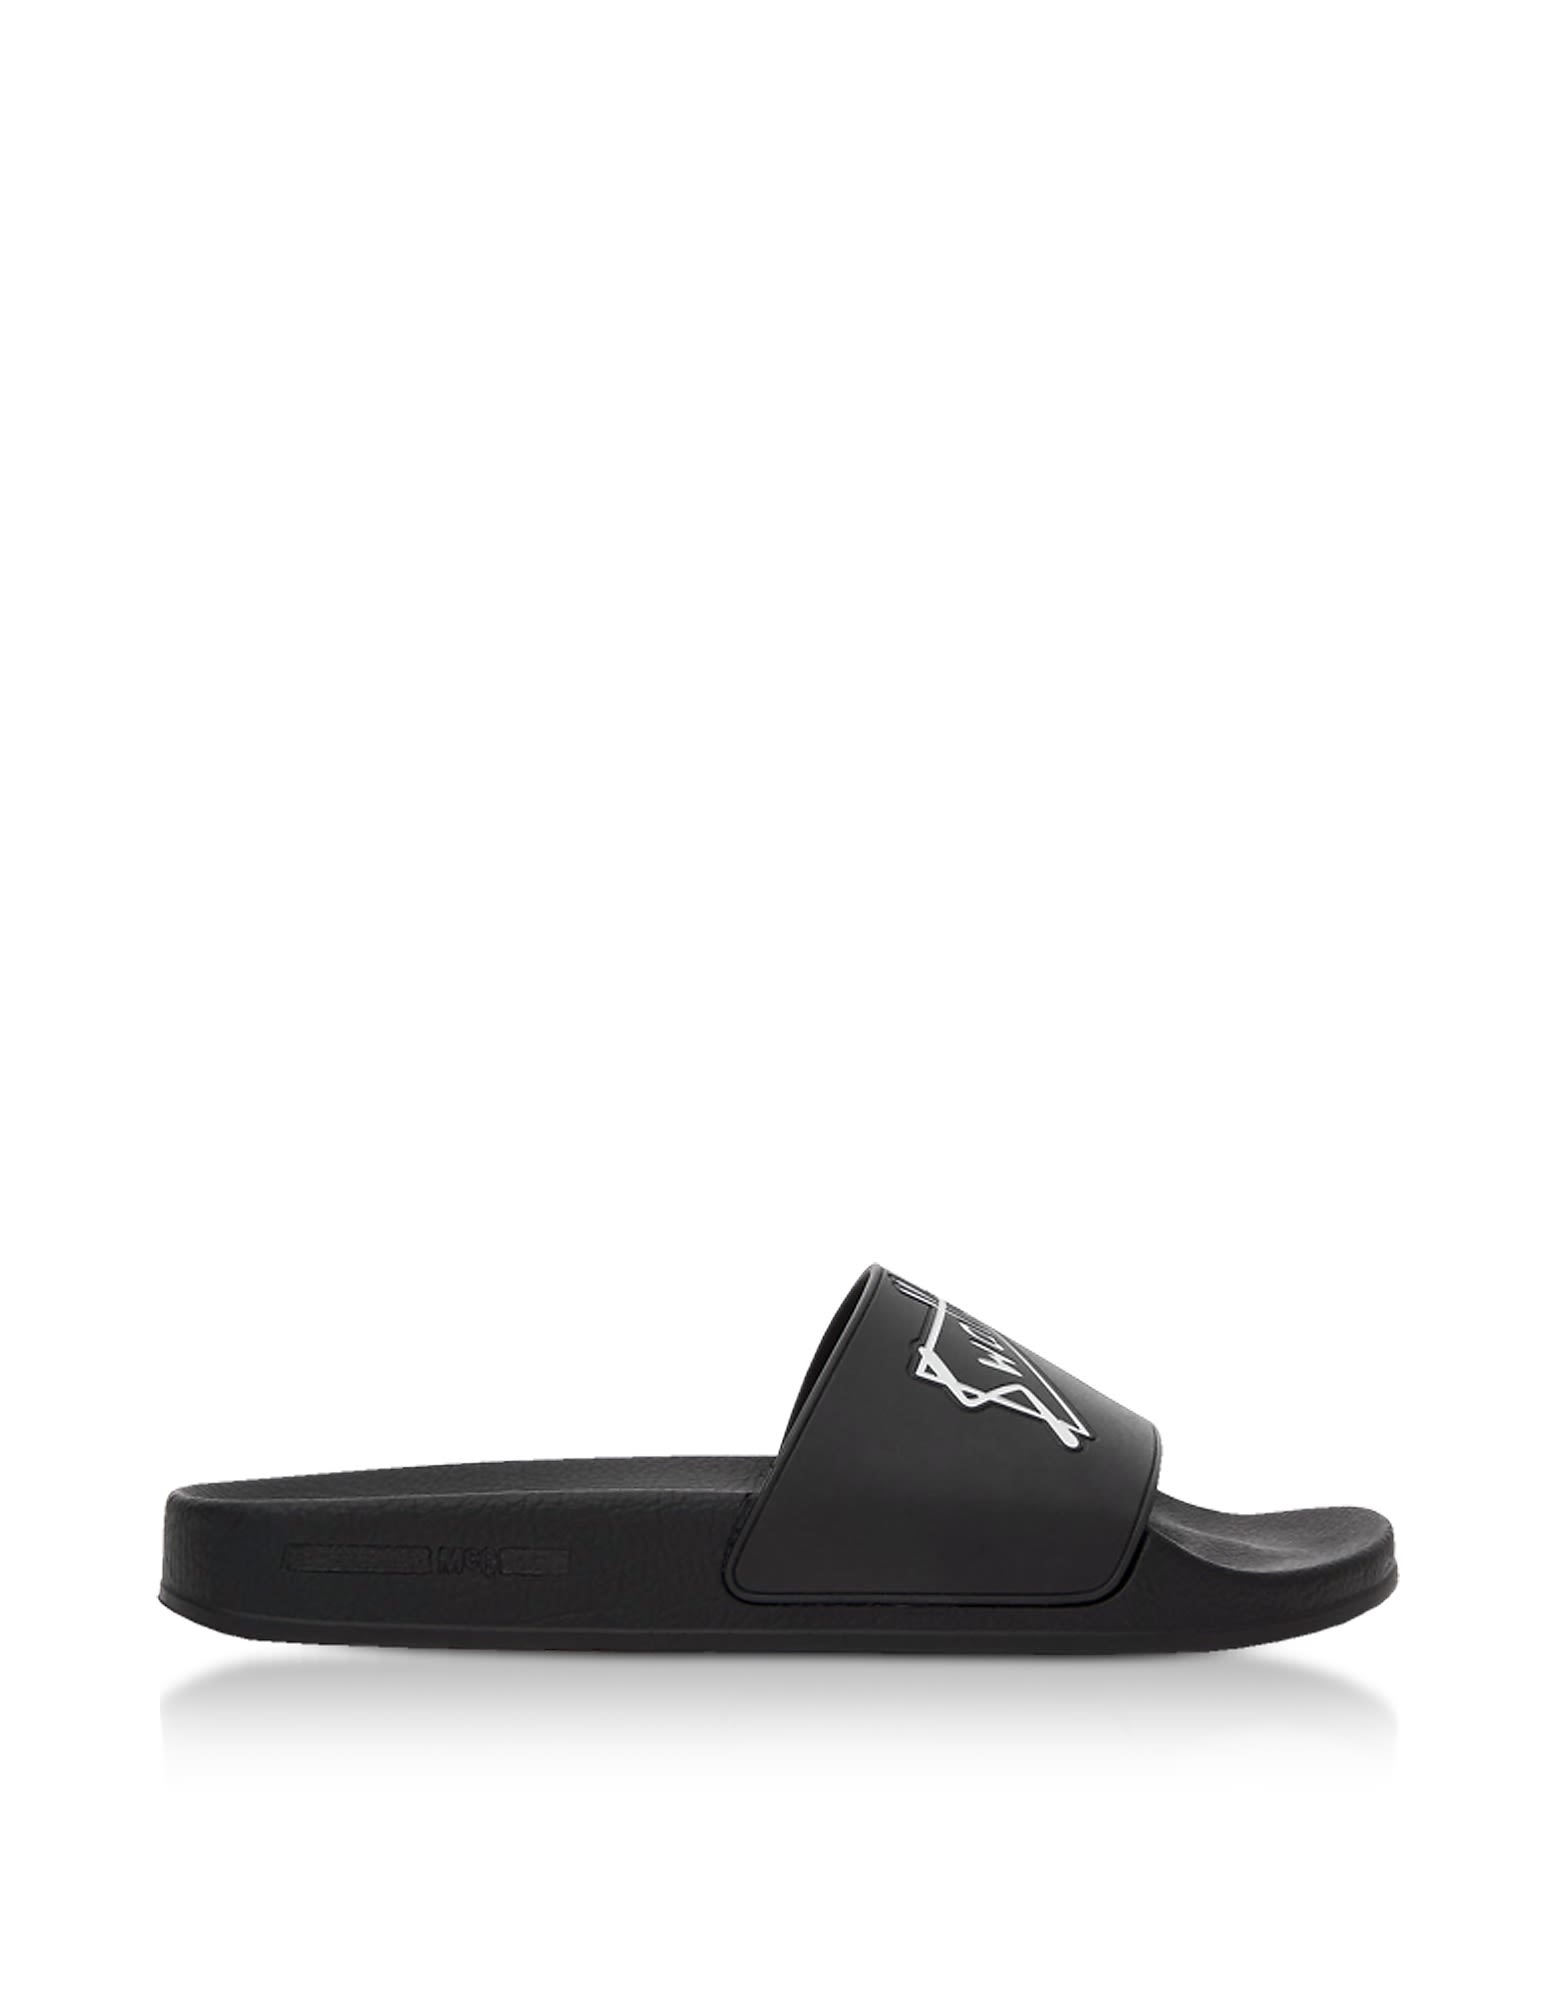 McQ Alexander McQueen Black Swallow Slide Sandals